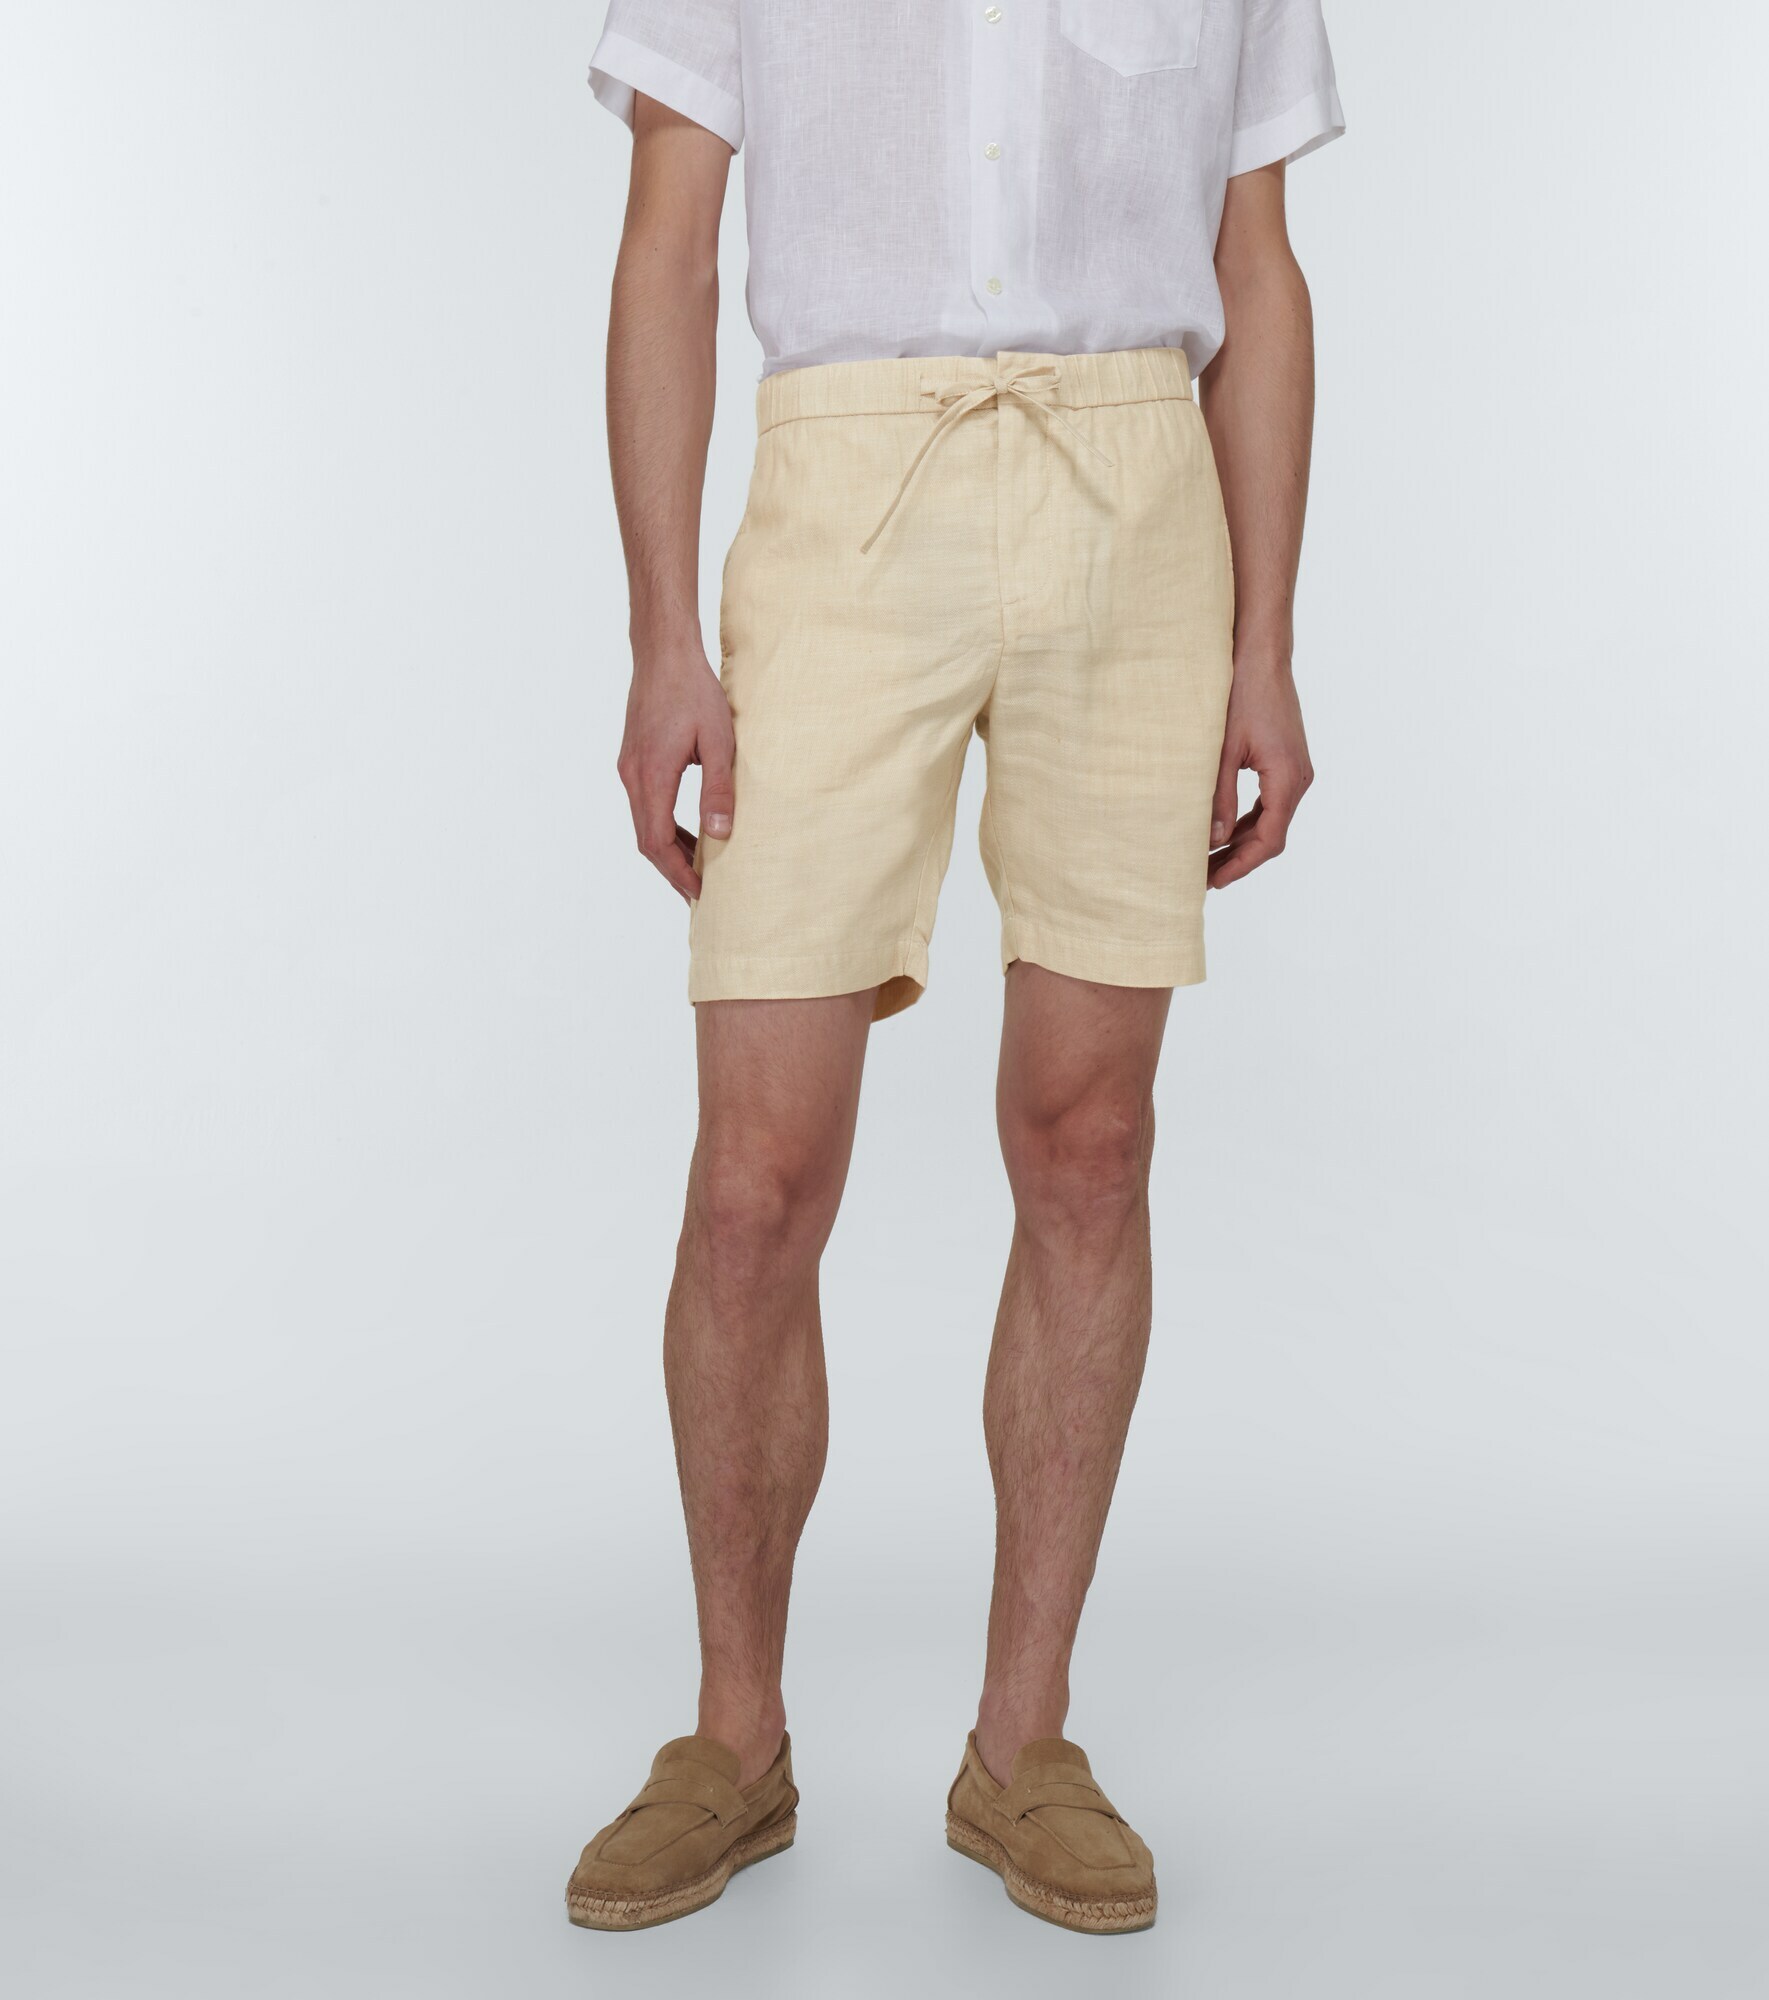 Frescobol Carioca - Felipe linen and cotton shorts Frescobol Carioca